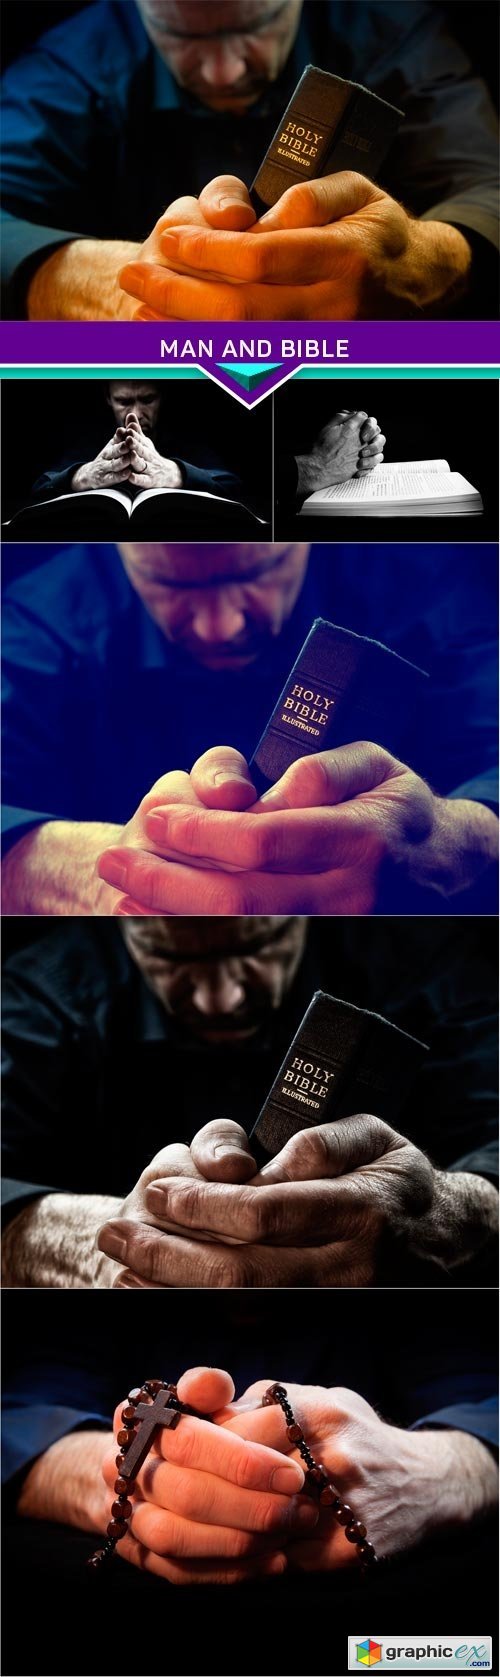 Man and Bible 6x JPEG